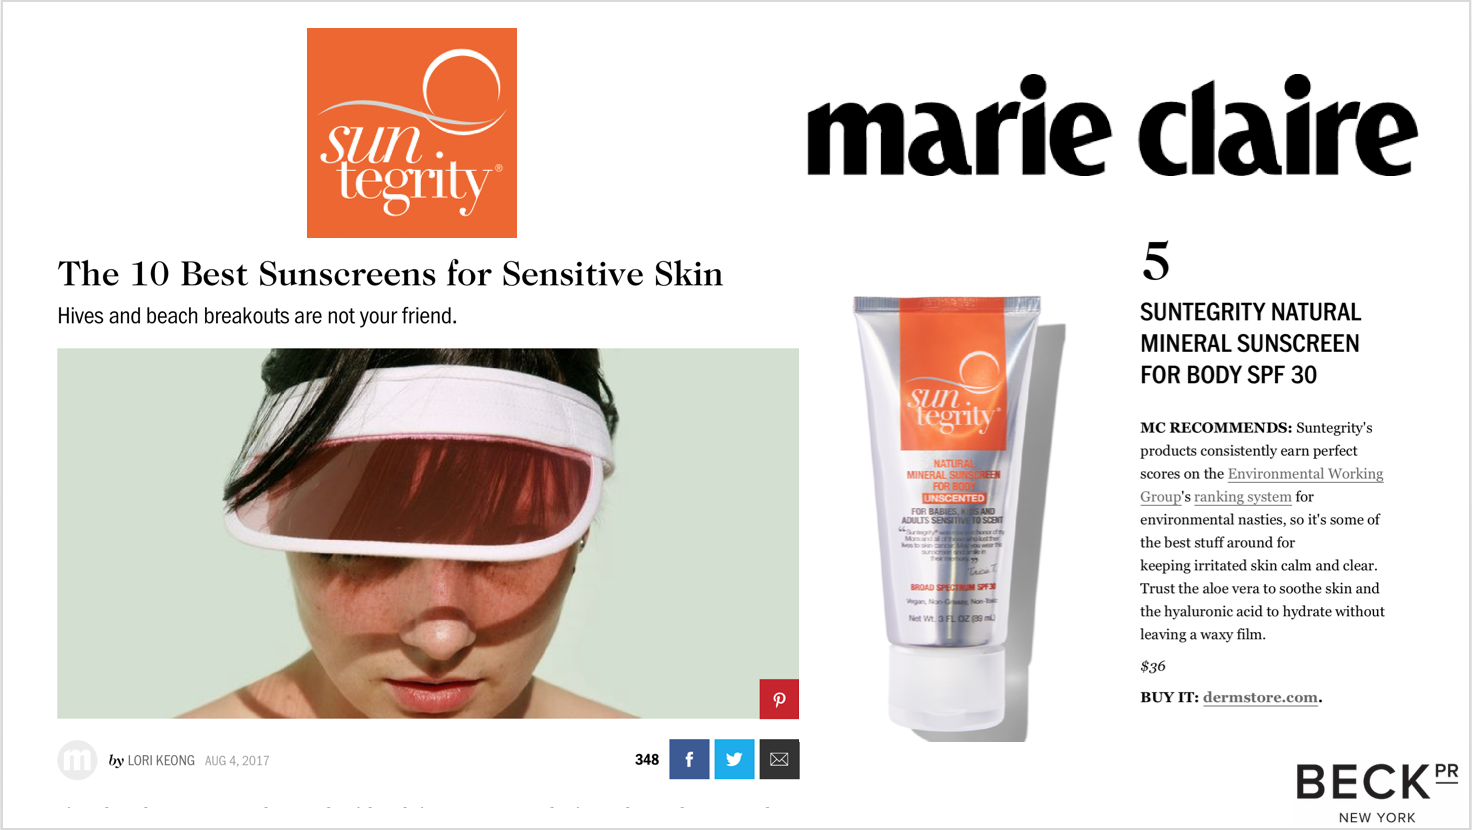 The 10 Best Sunscreens For Sensitive Skin - Suntegrity Natural Mineral Sunscreen Body SPF 30